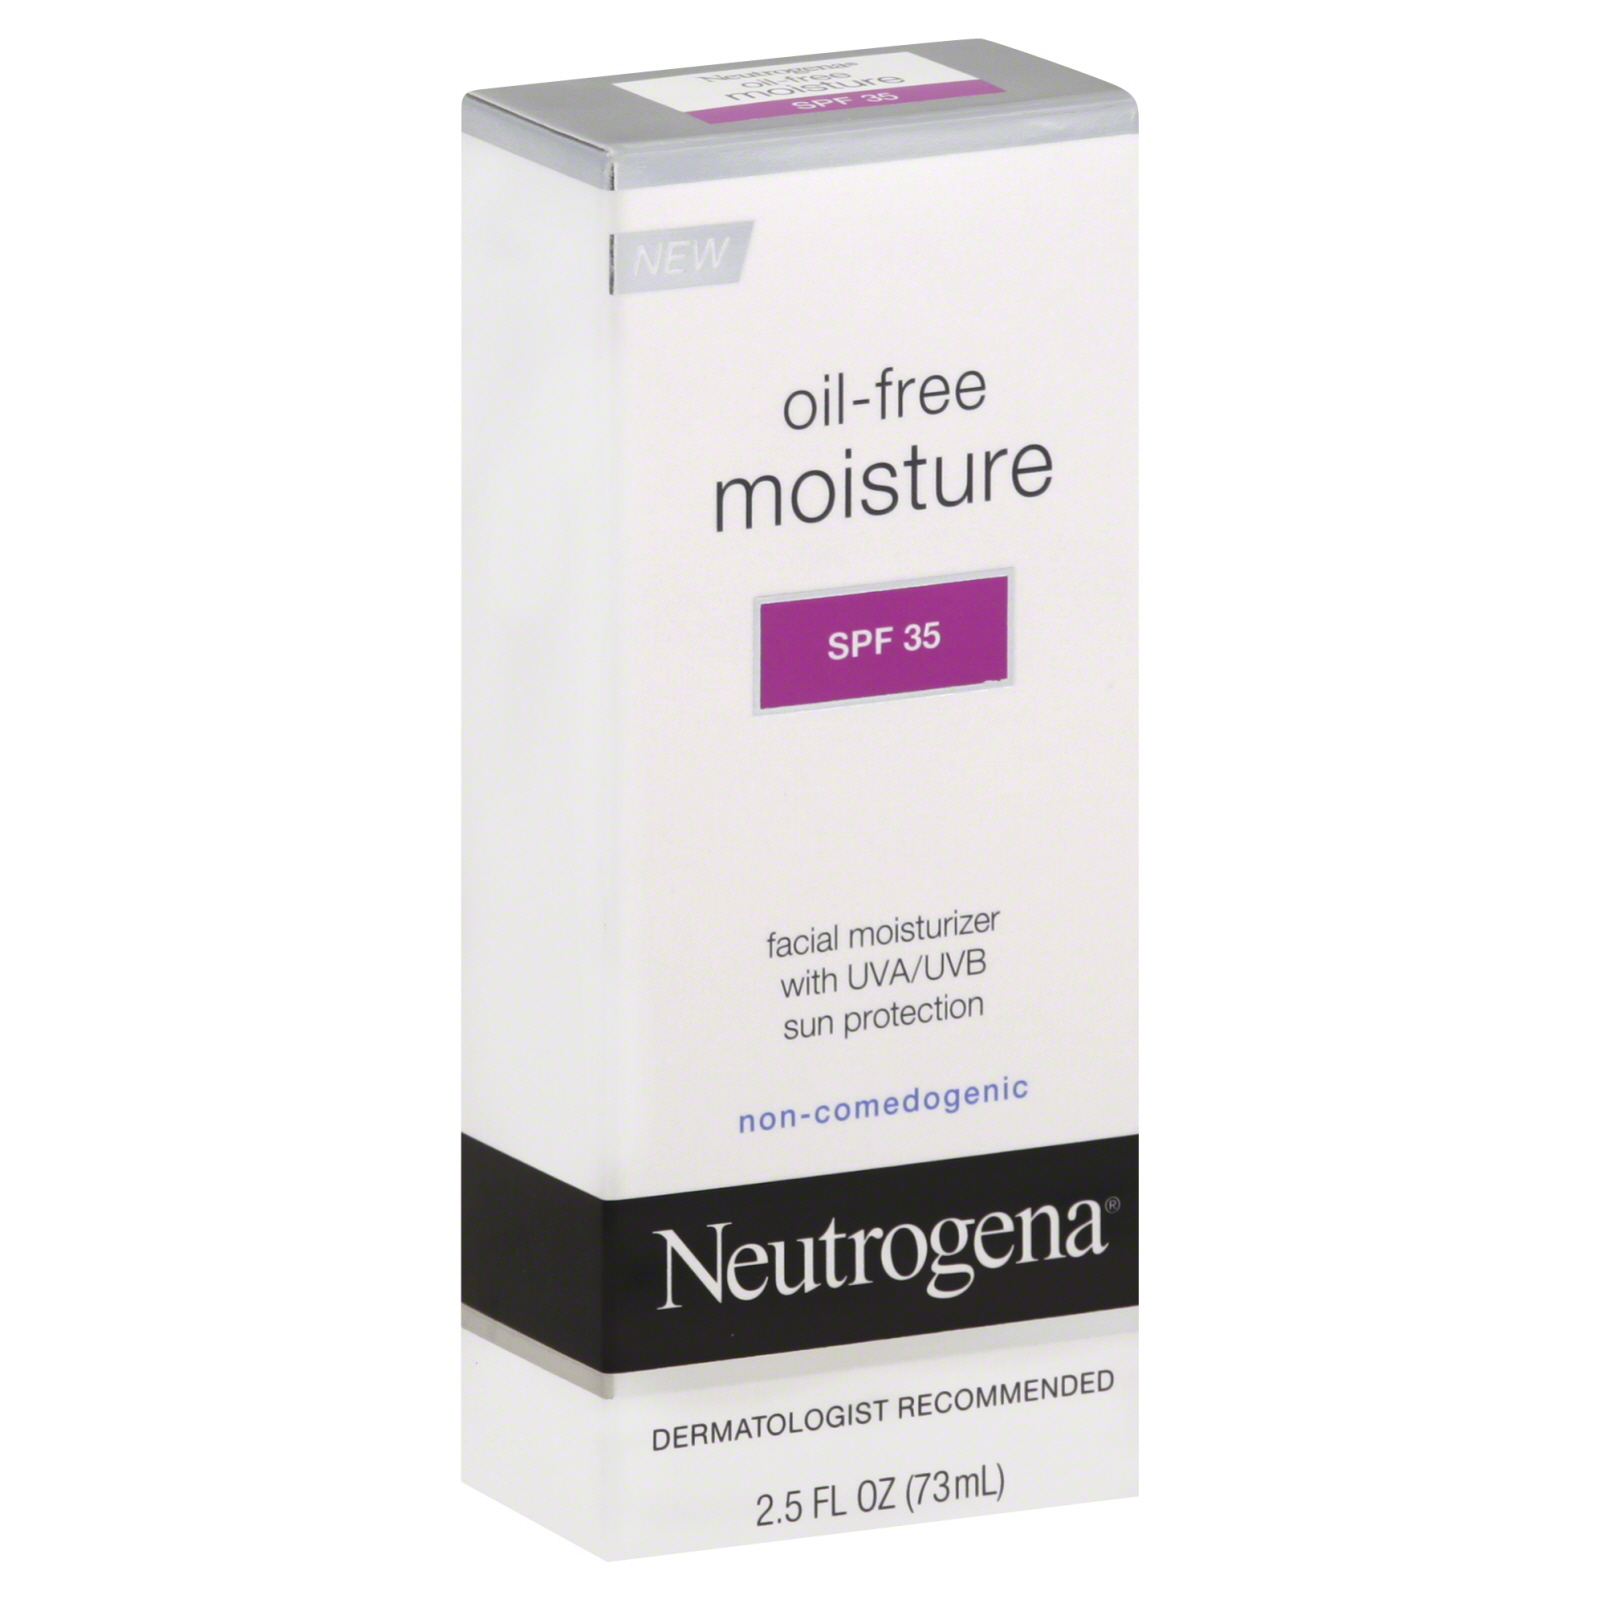 Neutrogena Facial Moisturizer, Oil-Free Moisture 2.5 fl oz (73 ml)